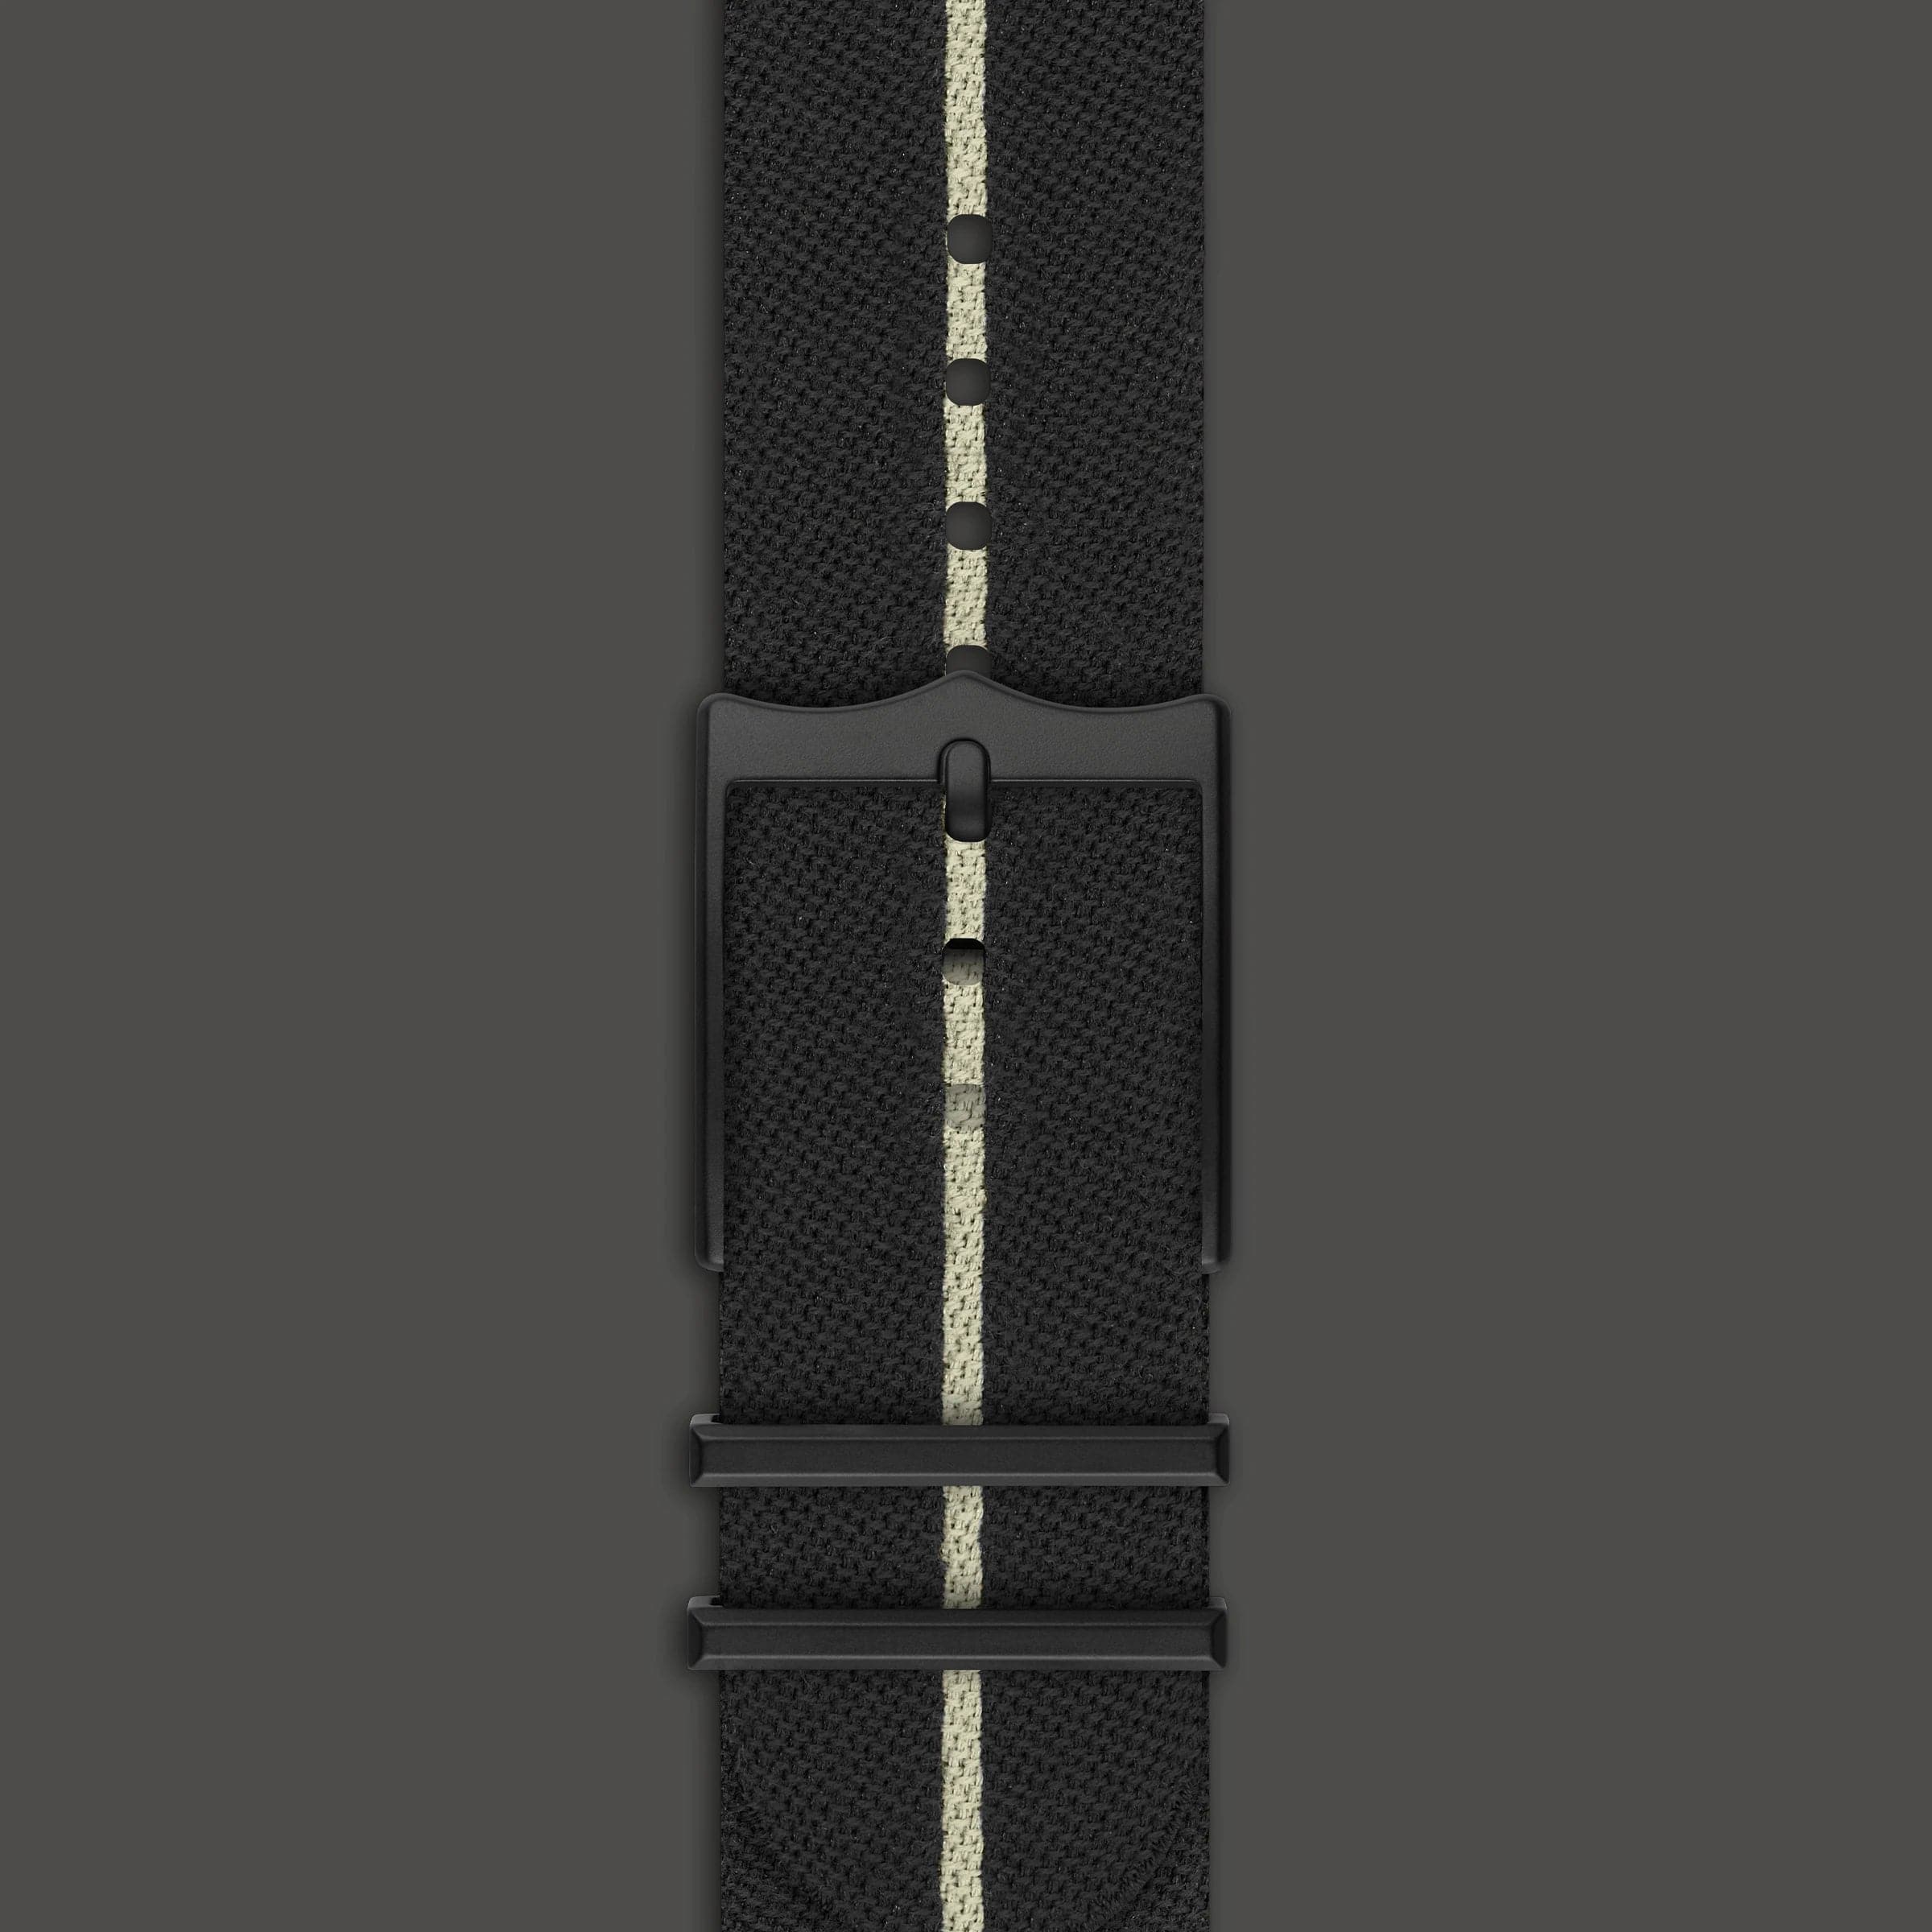 TUDOR Watch TUDOR Black Bay 41mm Ceramic Case, Hybrid Leather and Rubber Strap (M79210CNU-0001)